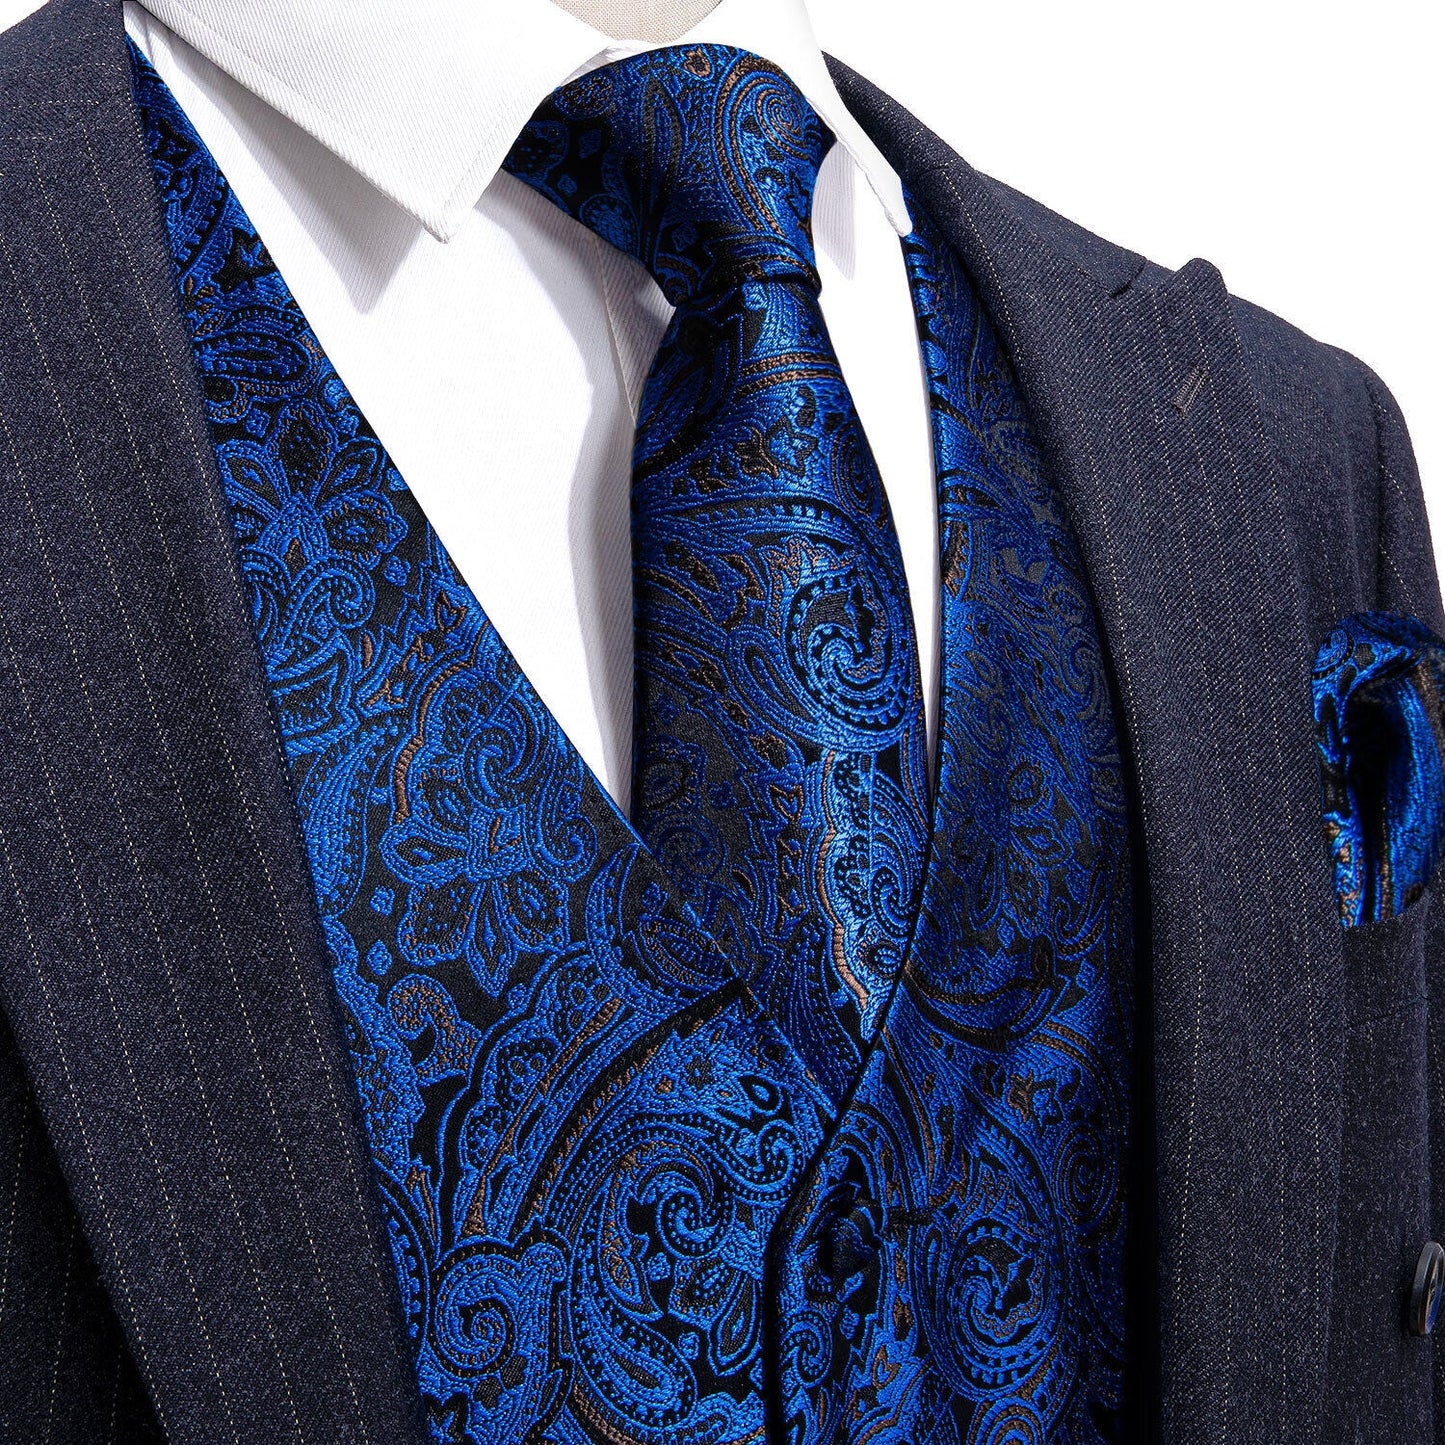 Designer Floral Waistcoat Silky Novelty Vest Damask Paisley Sea Blue